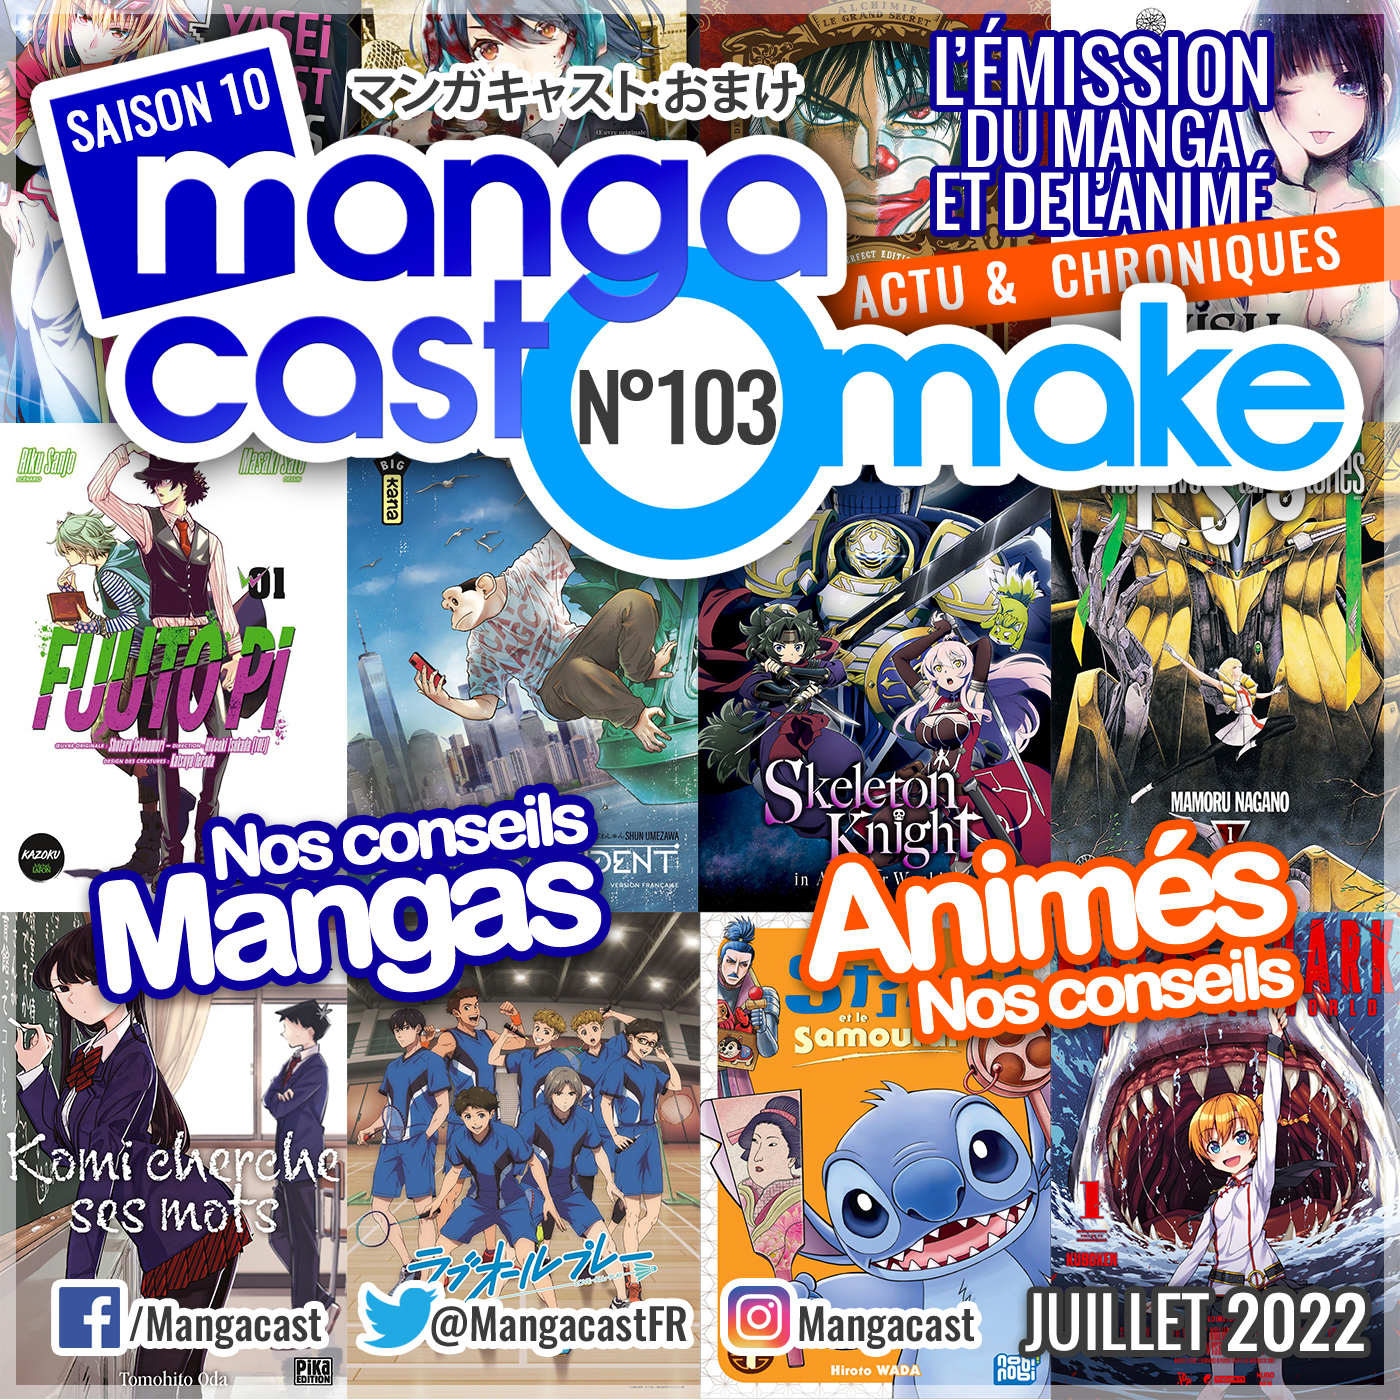 Cartouche du Mangacast Omake n°103